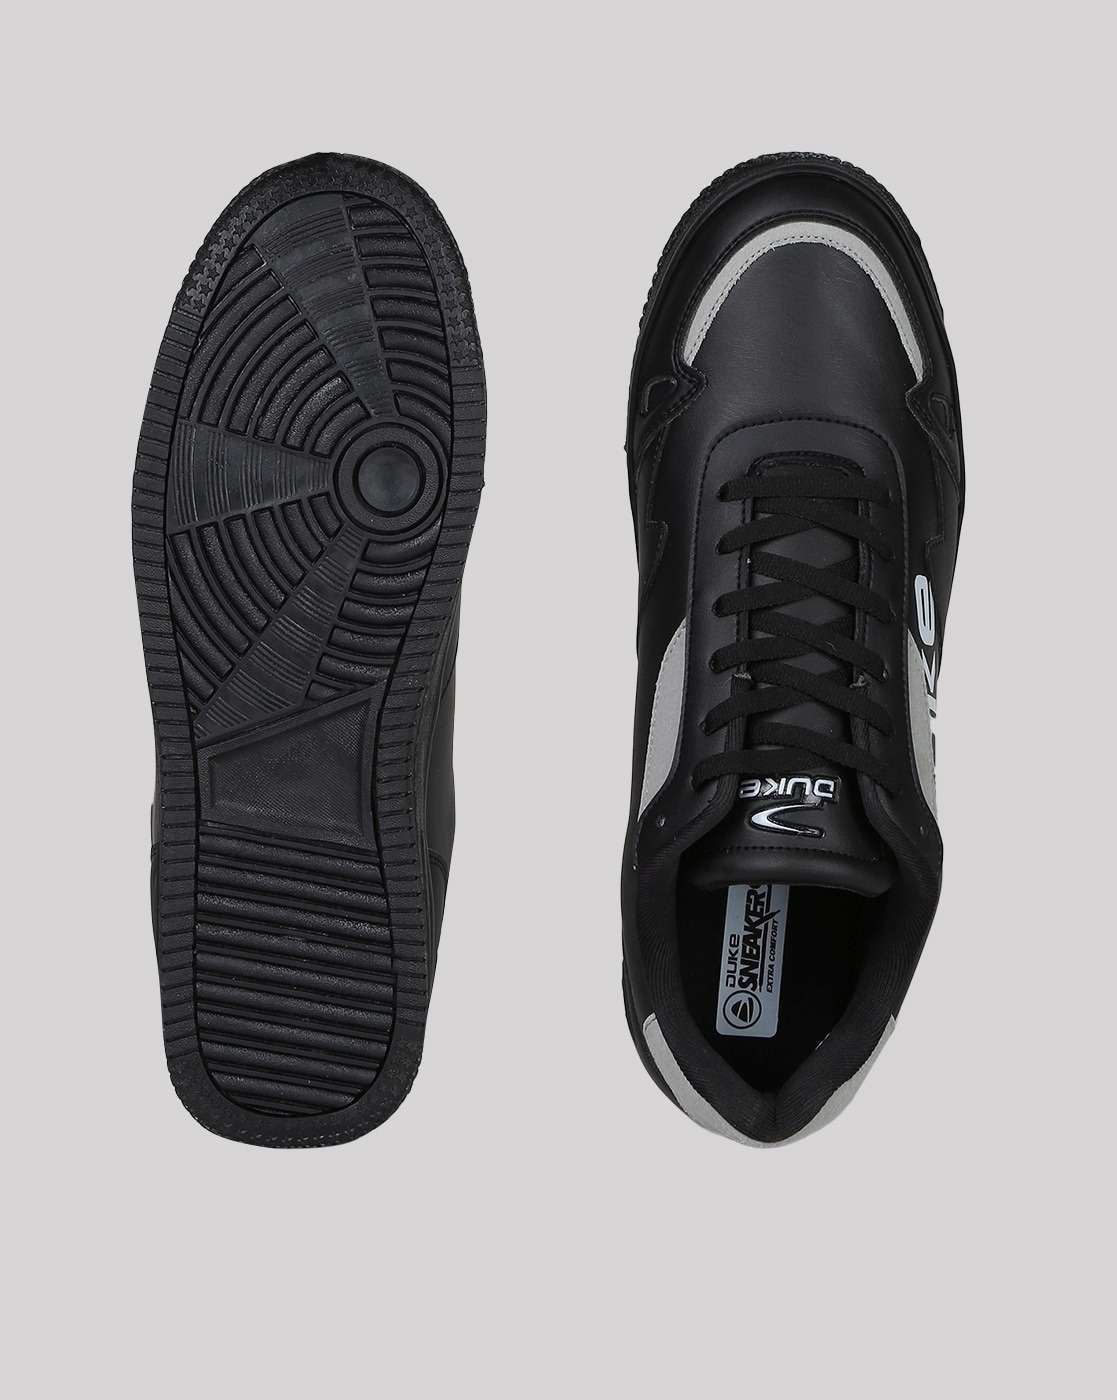 duke energy Logo Chunky Shoes White Black Max Soul Sneakers For Men And  Women - Banantees